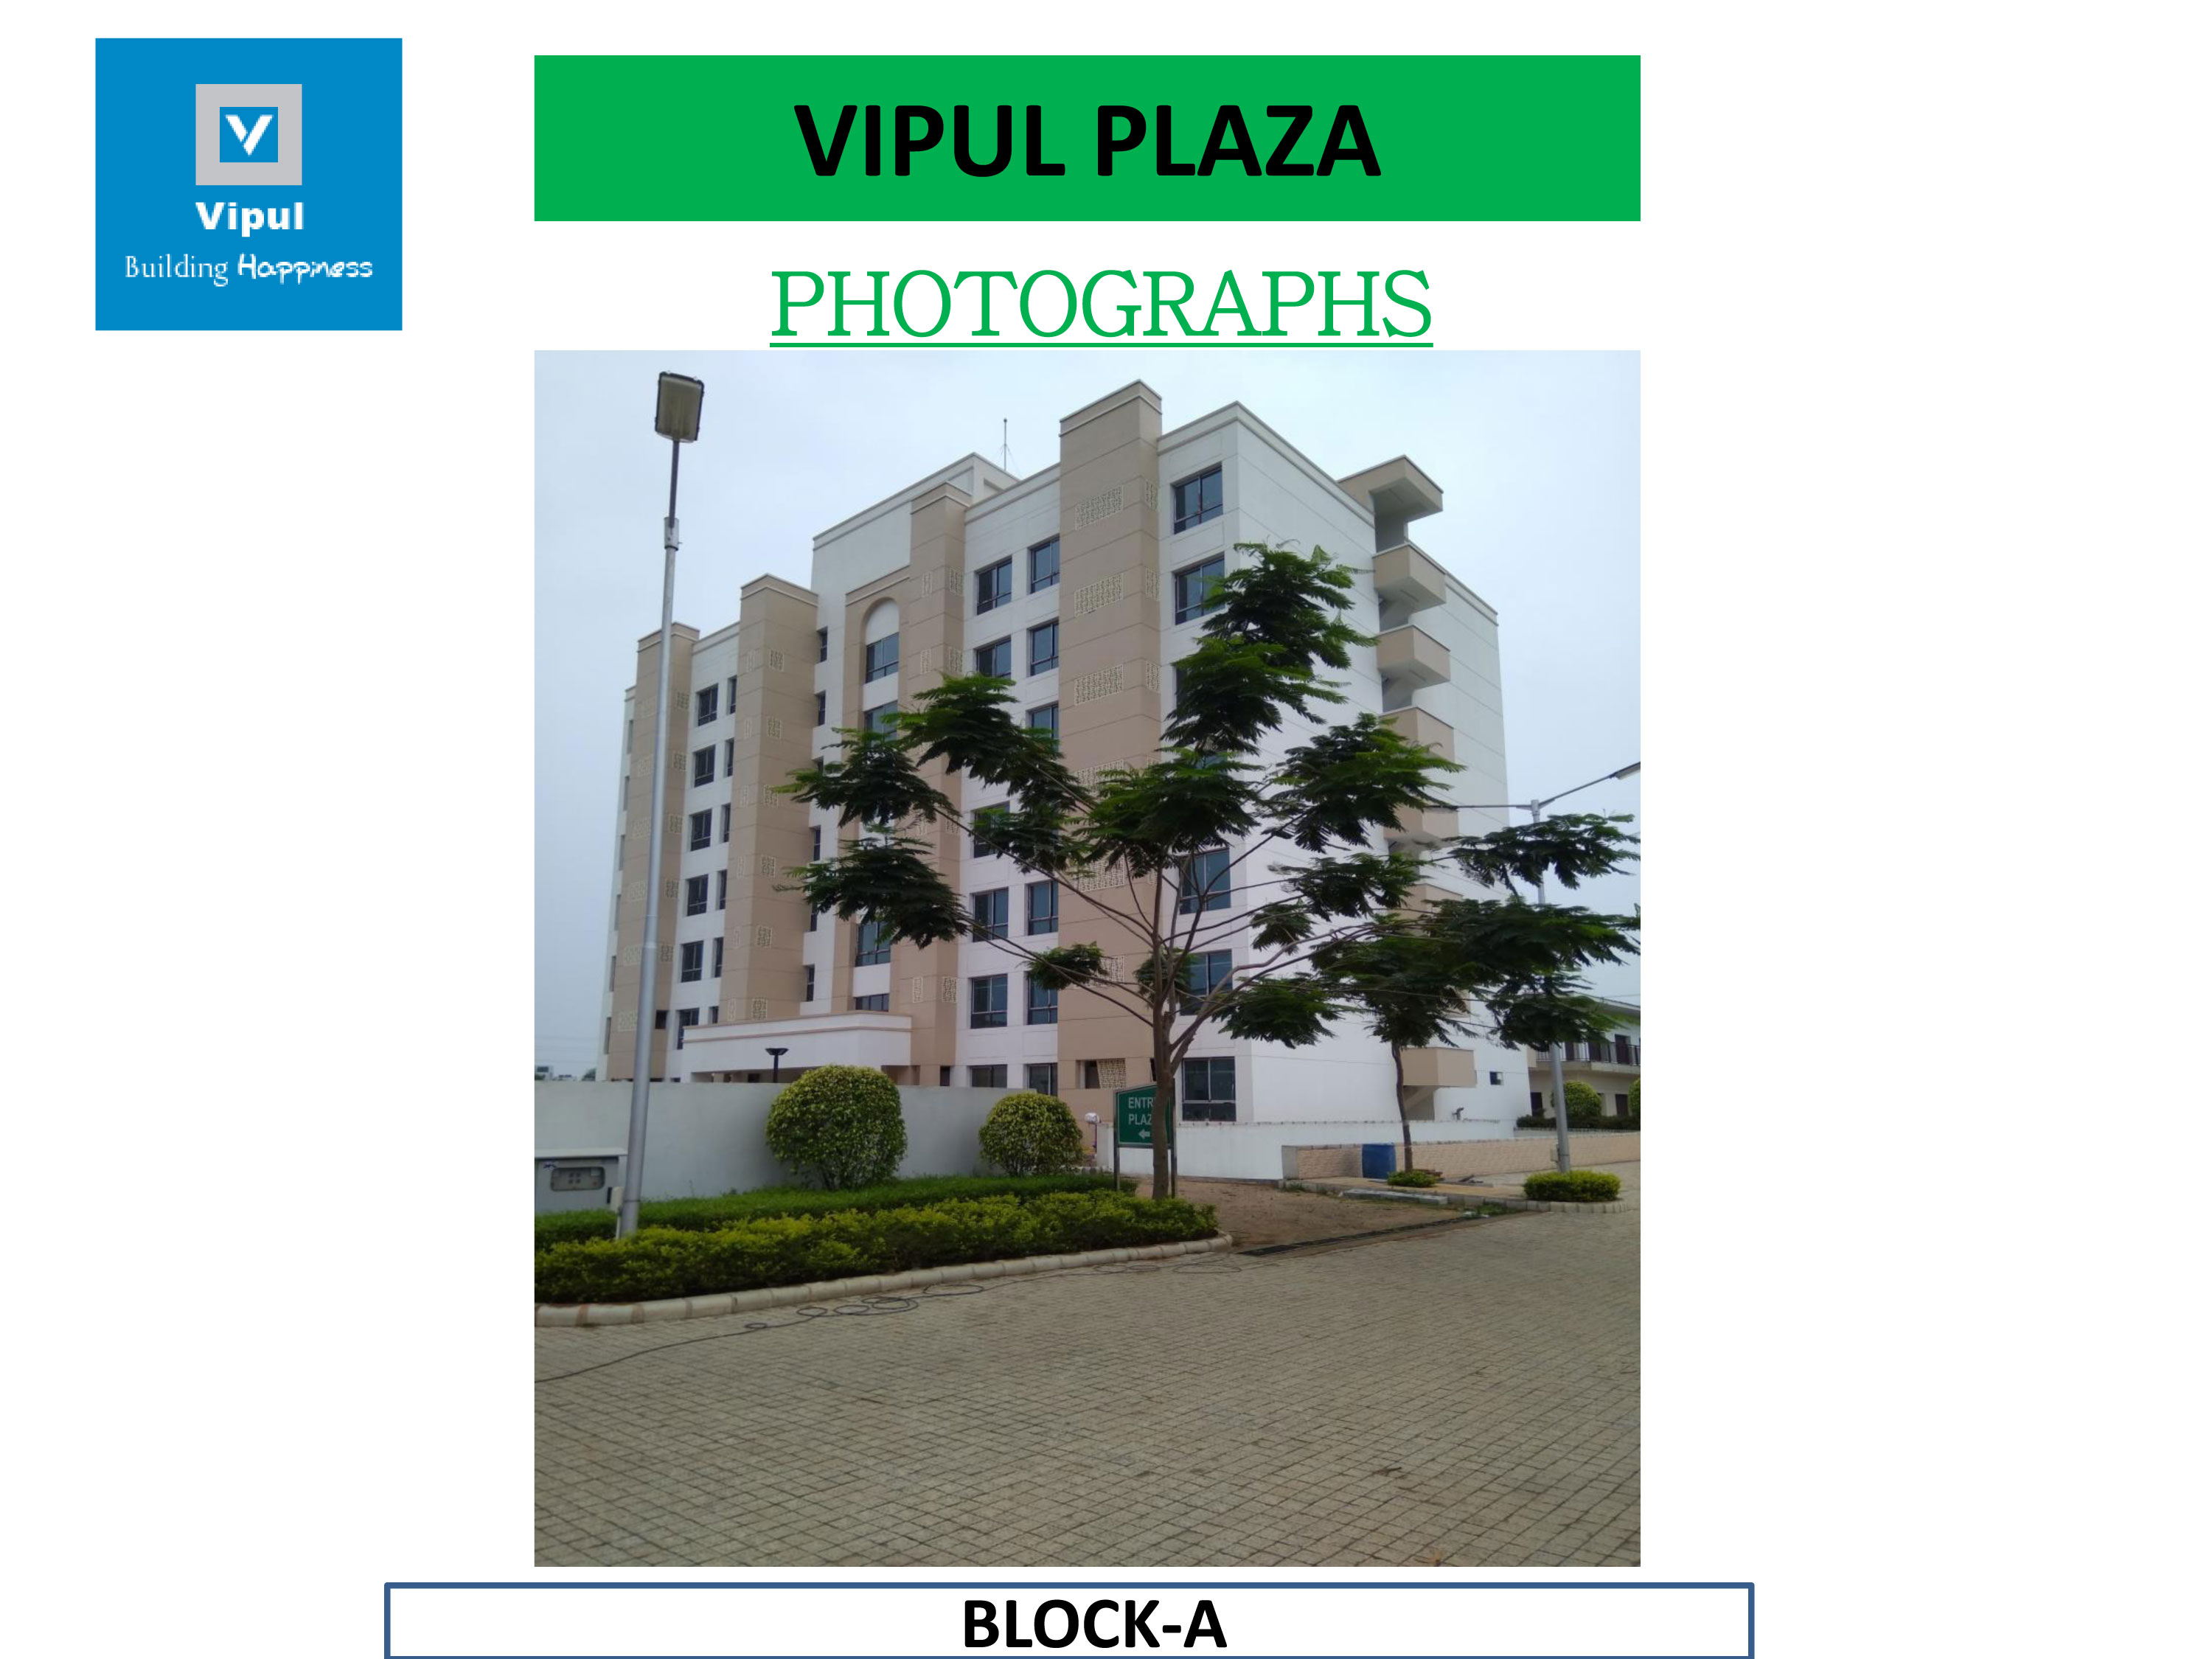 Vipul Plaza